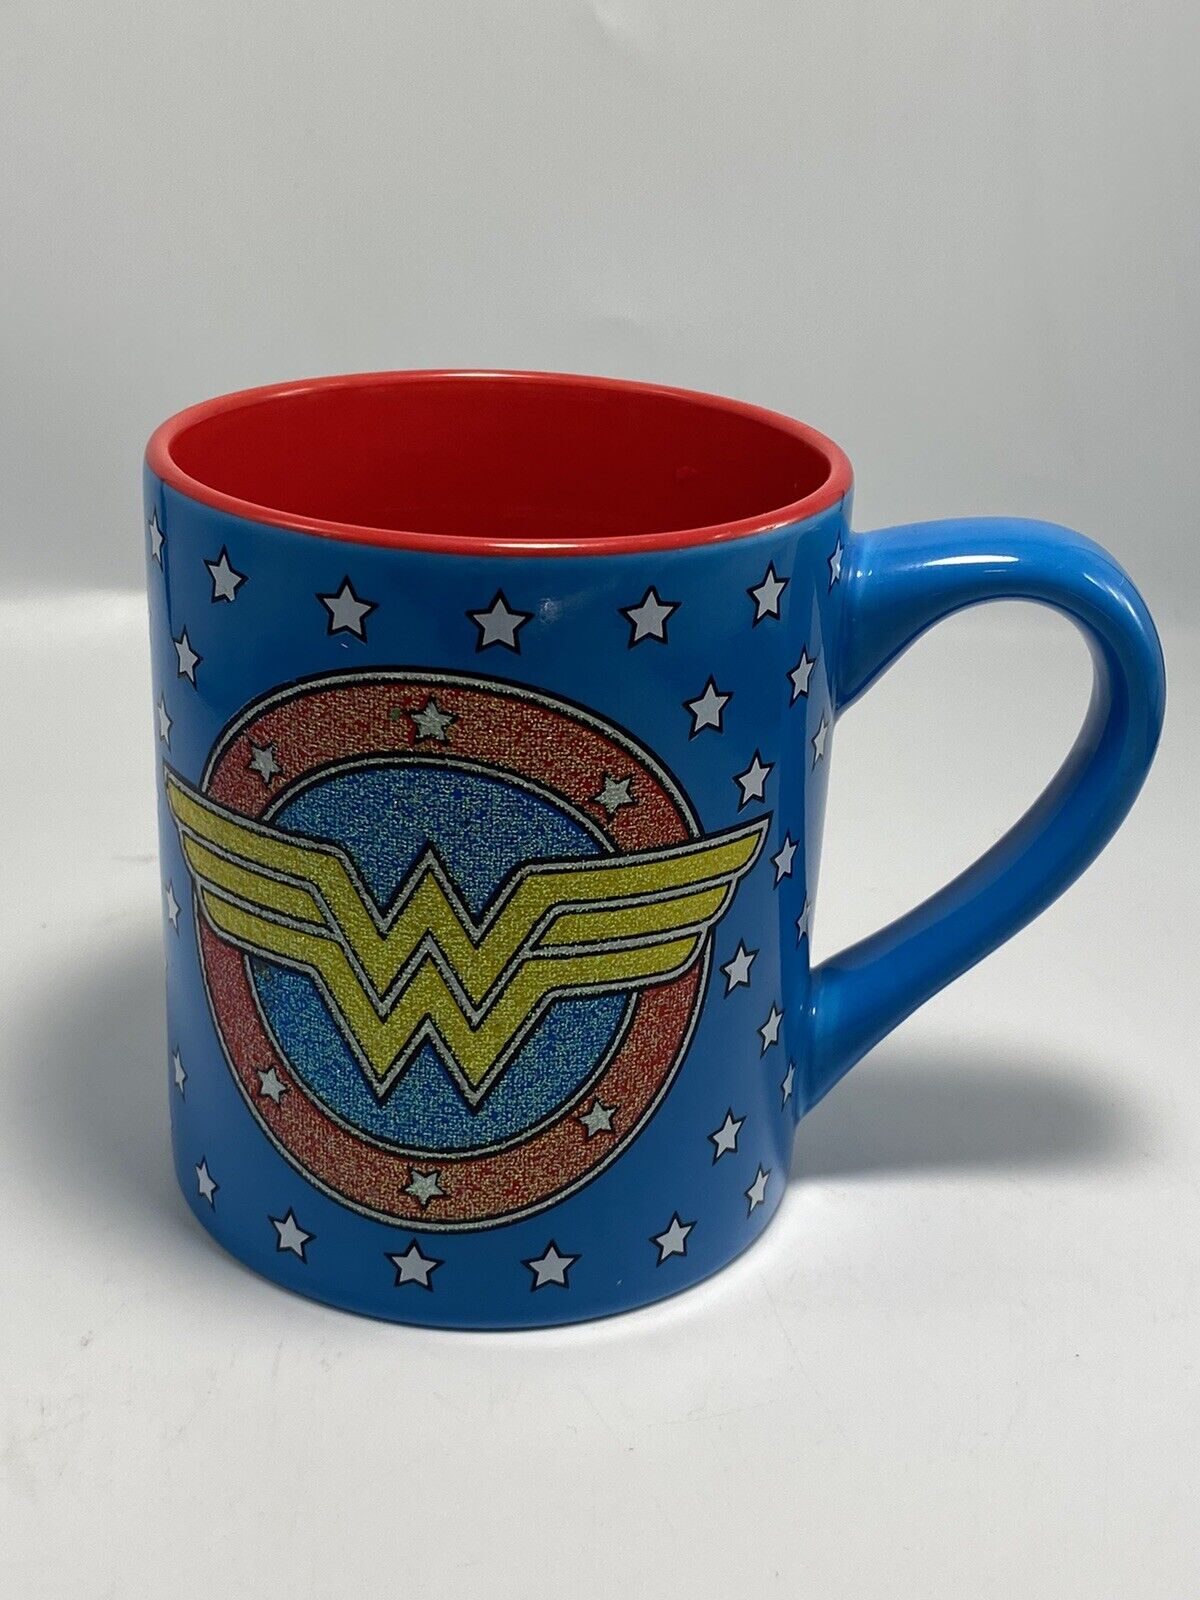 DC Comics Wonder Woman Glitter Logo Star Blue Coffee Mug